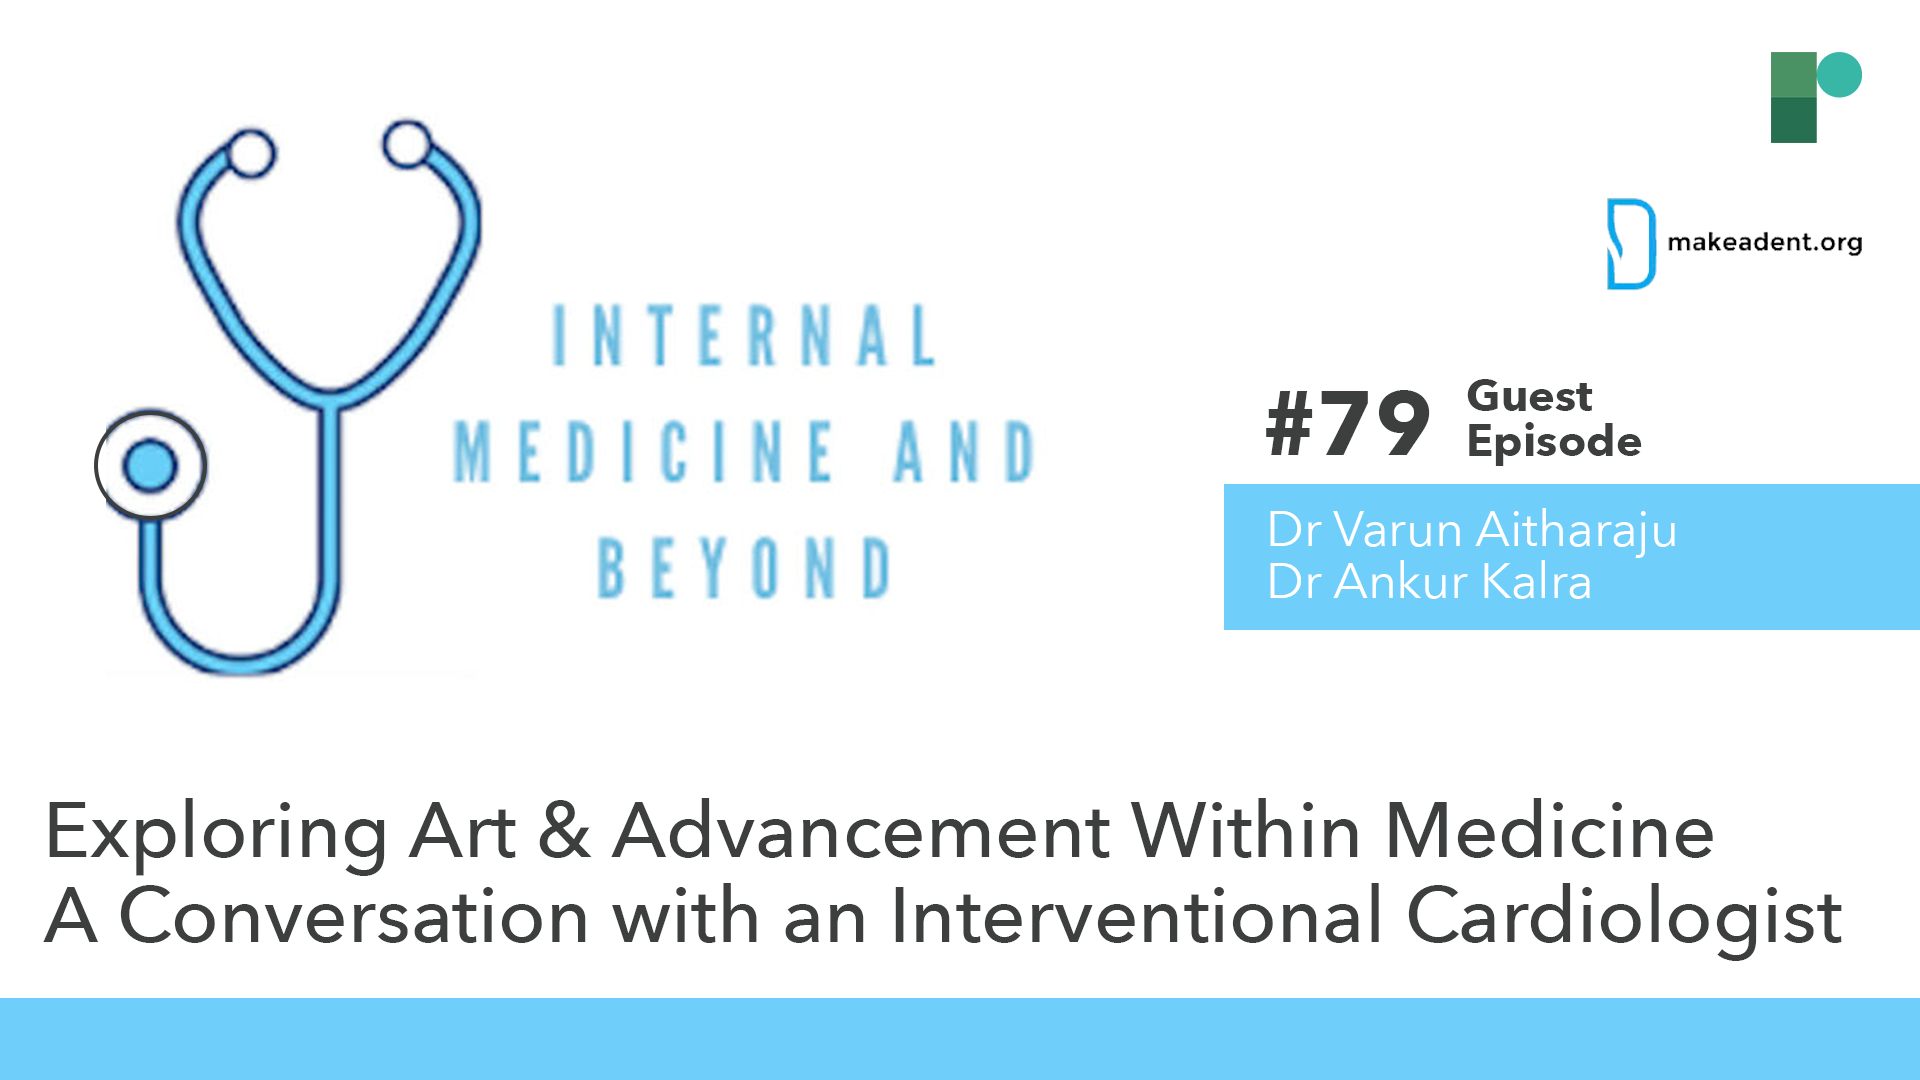 Guest Episode: Exploring Art & Advancement Within Medicine